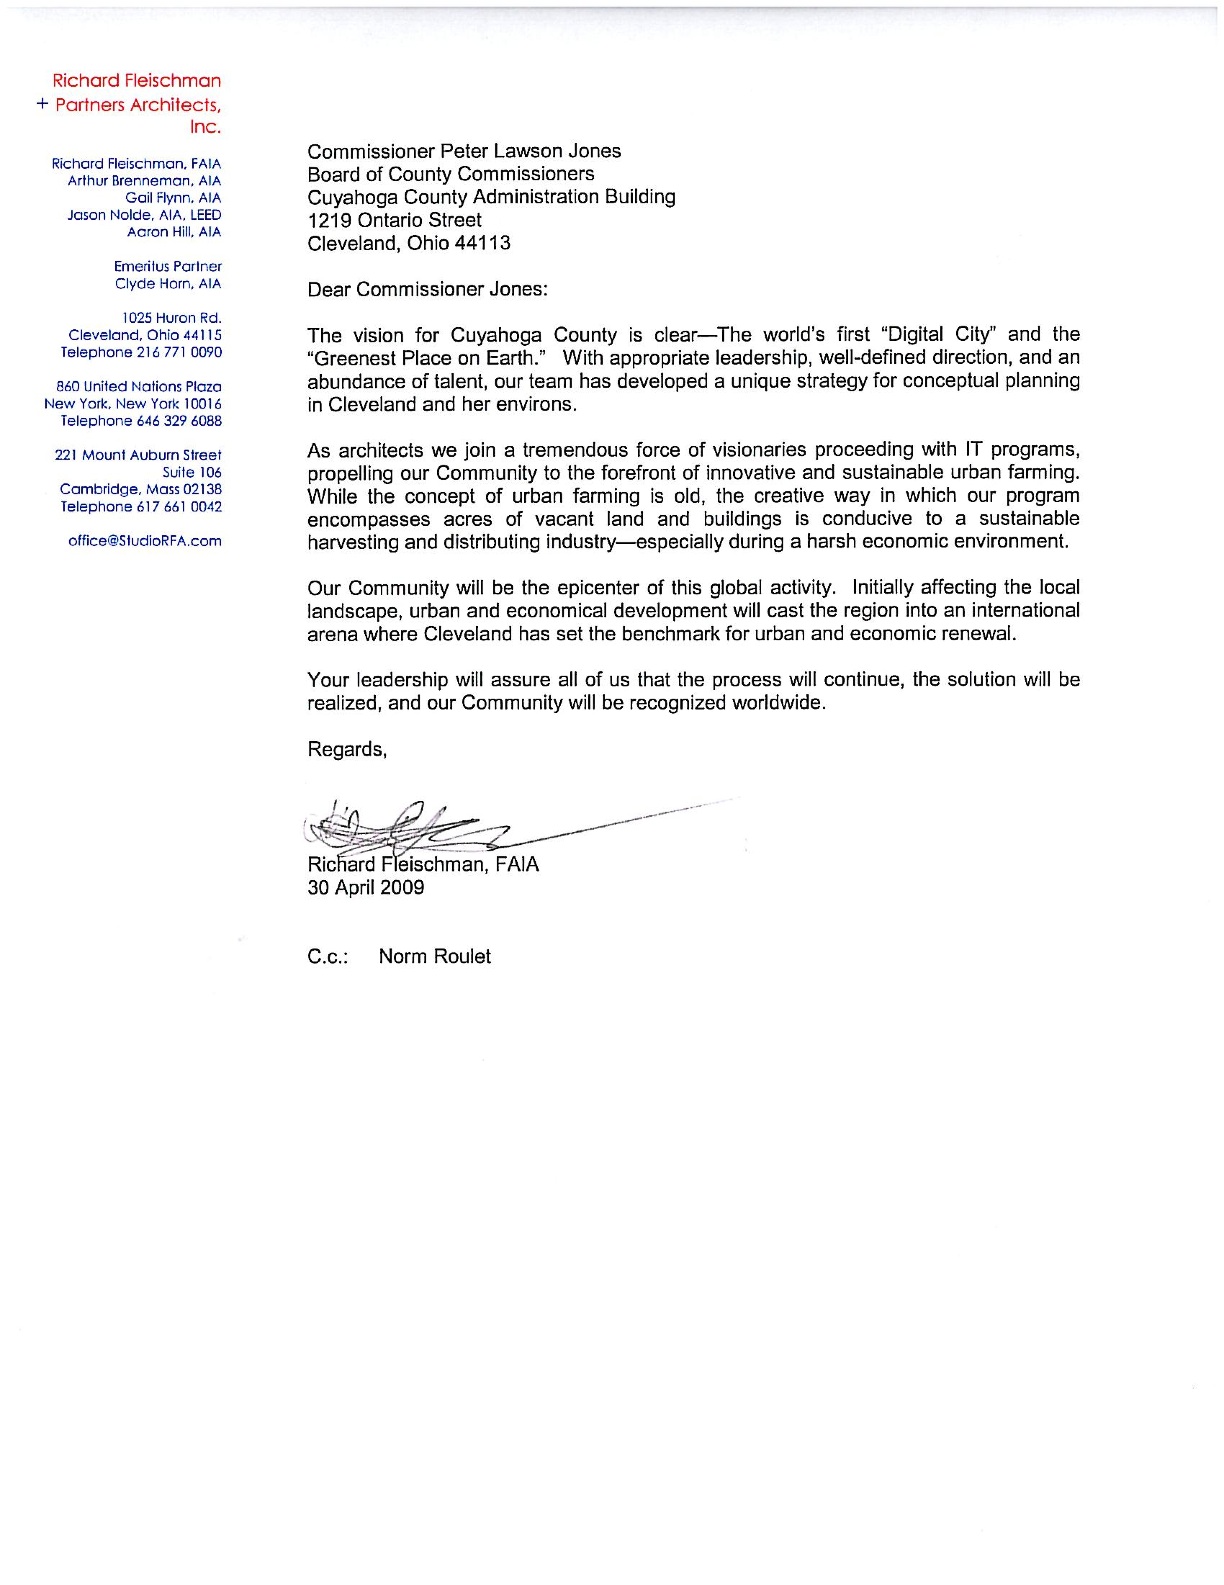  - 05 01 09 Letter to Commissioner Peter Lawson Jones_0